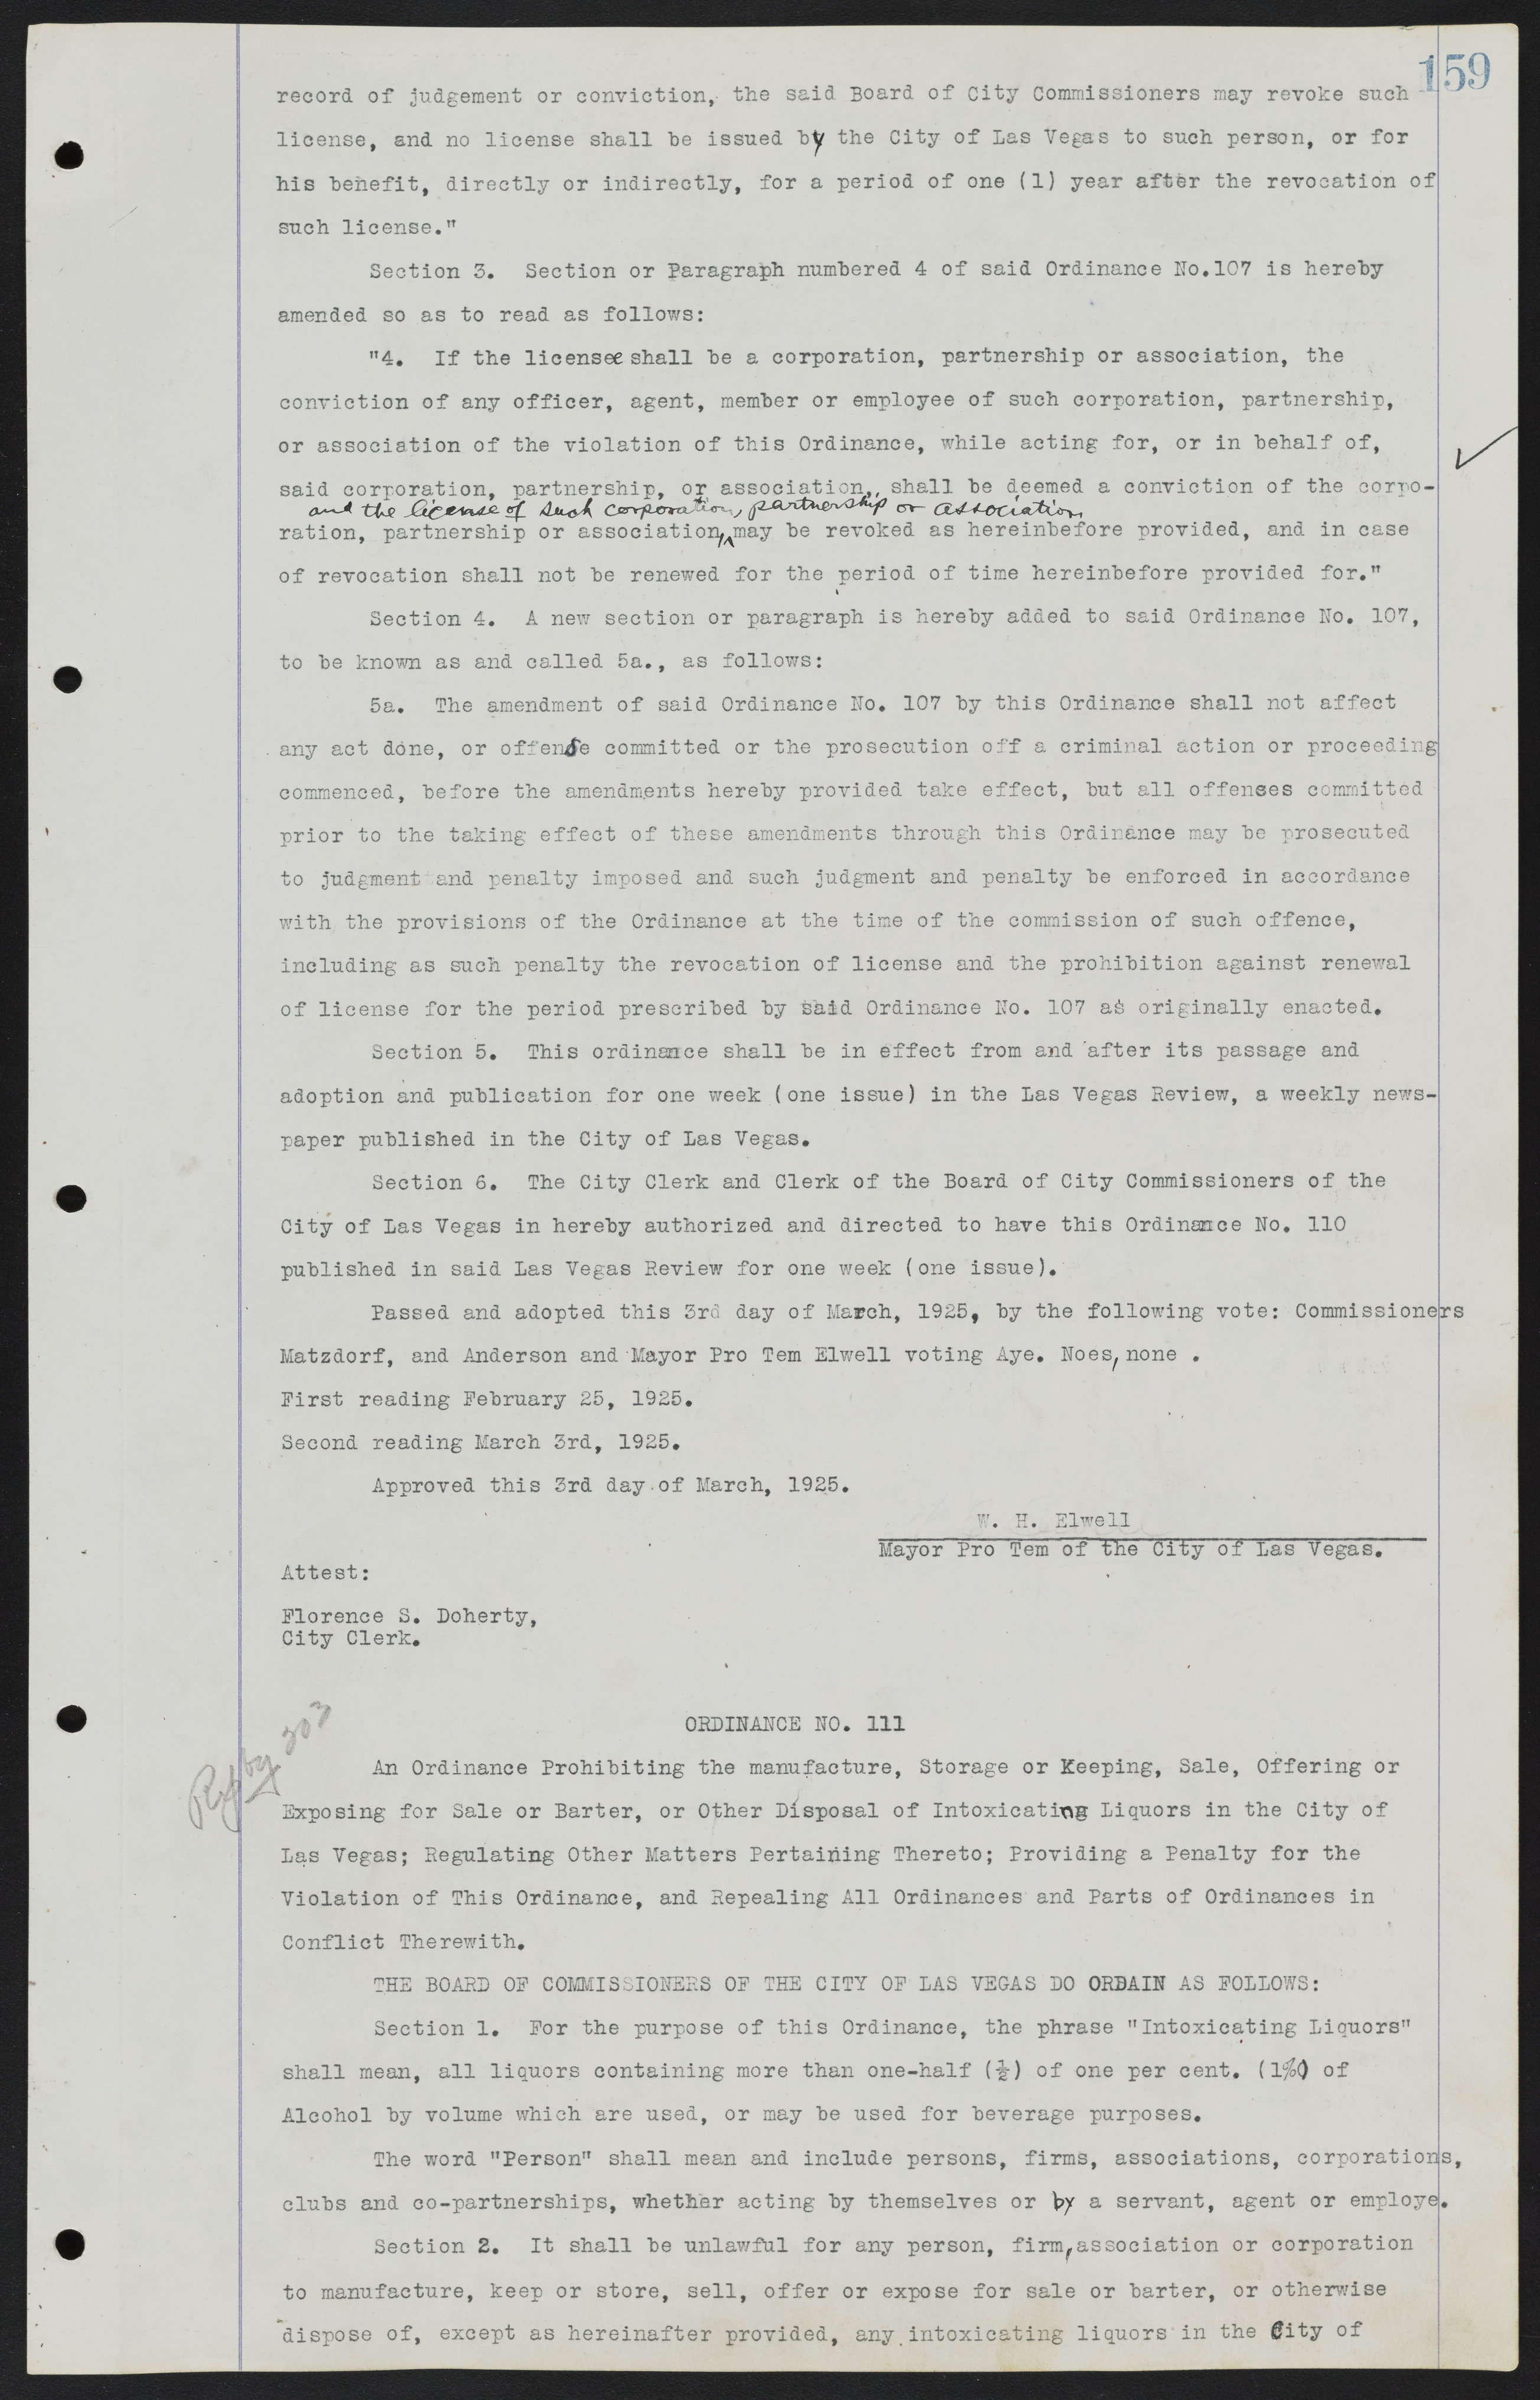 Las Vegas City Ordinances, July 18, 1911 to March 31, 1933, lvc000013-163